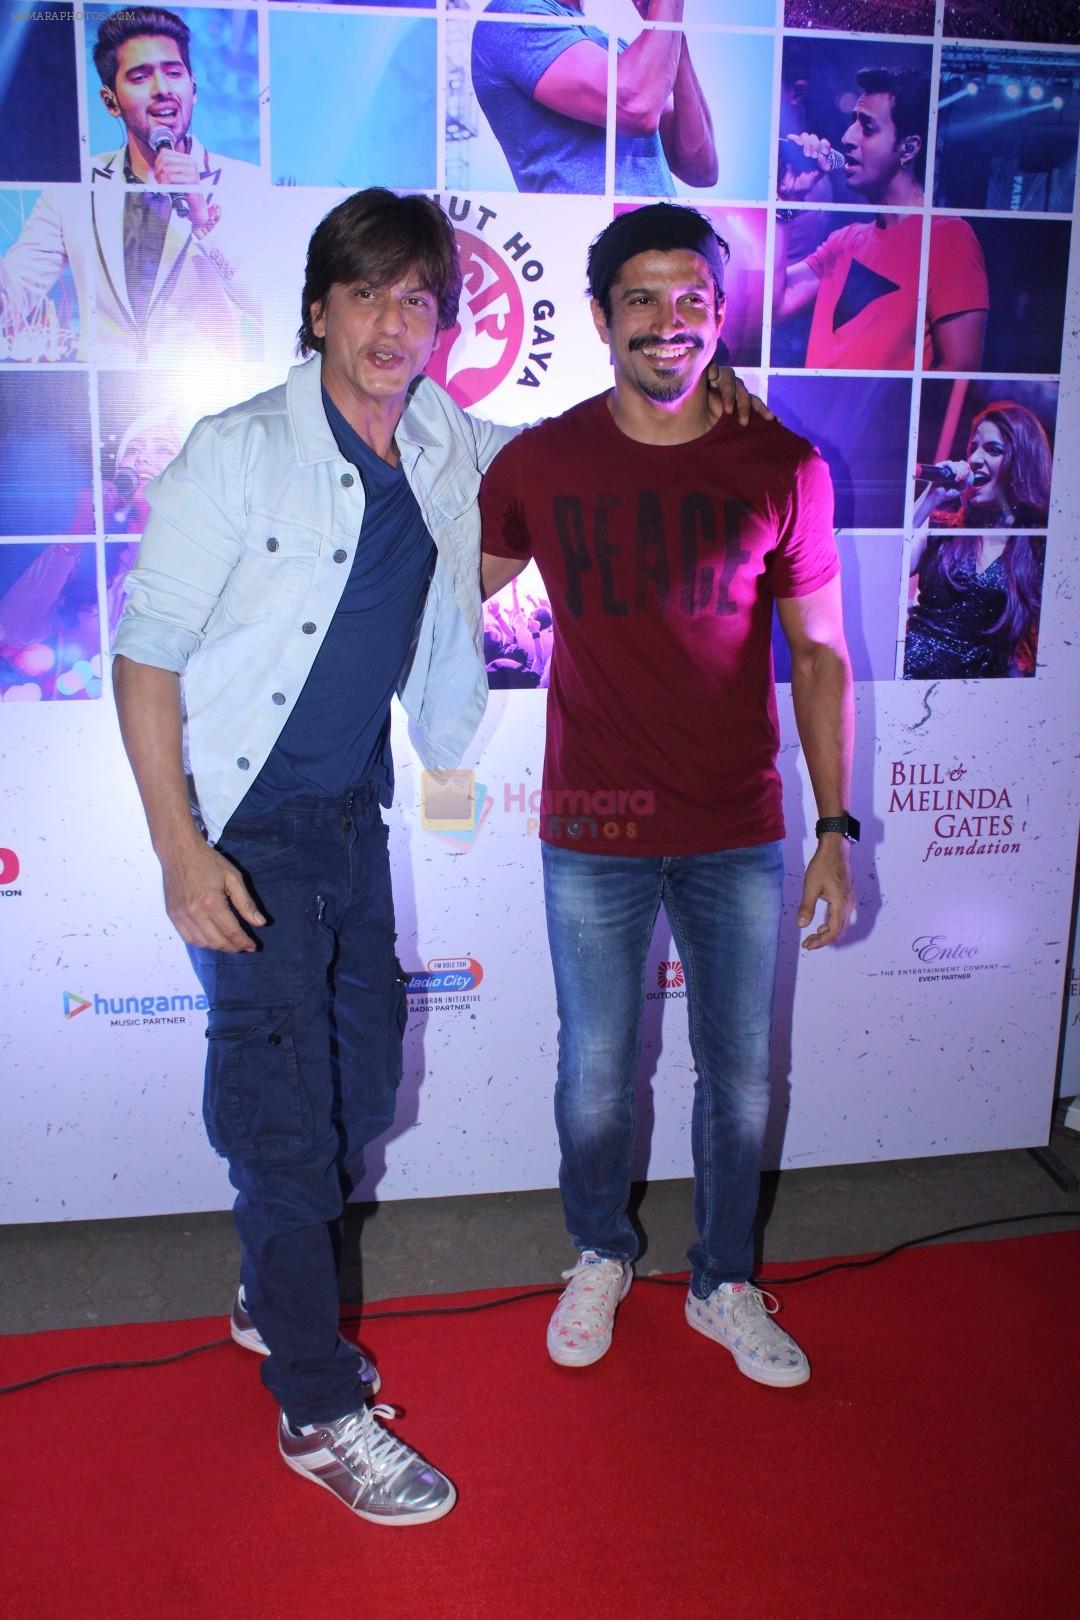 Shah Rukh Khan, Farhan Akhtar at The Red Carpet Of Lalkaar Concert on 21st Nov 2017